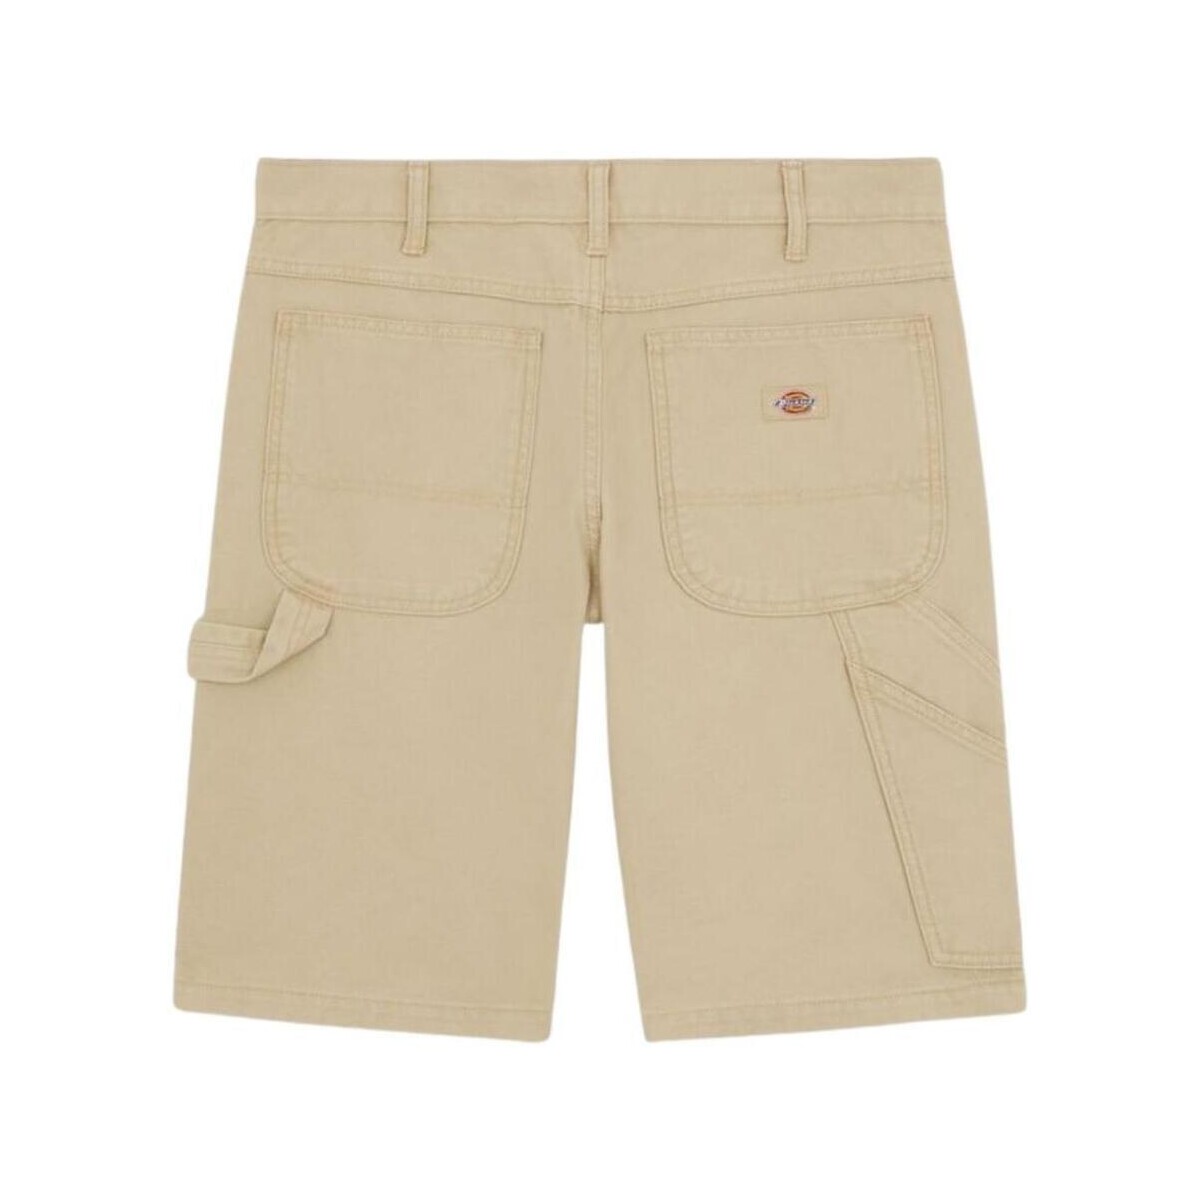 textil Hombre Shorts / Bermudas Dickies DK0A4XNGF021 Beige